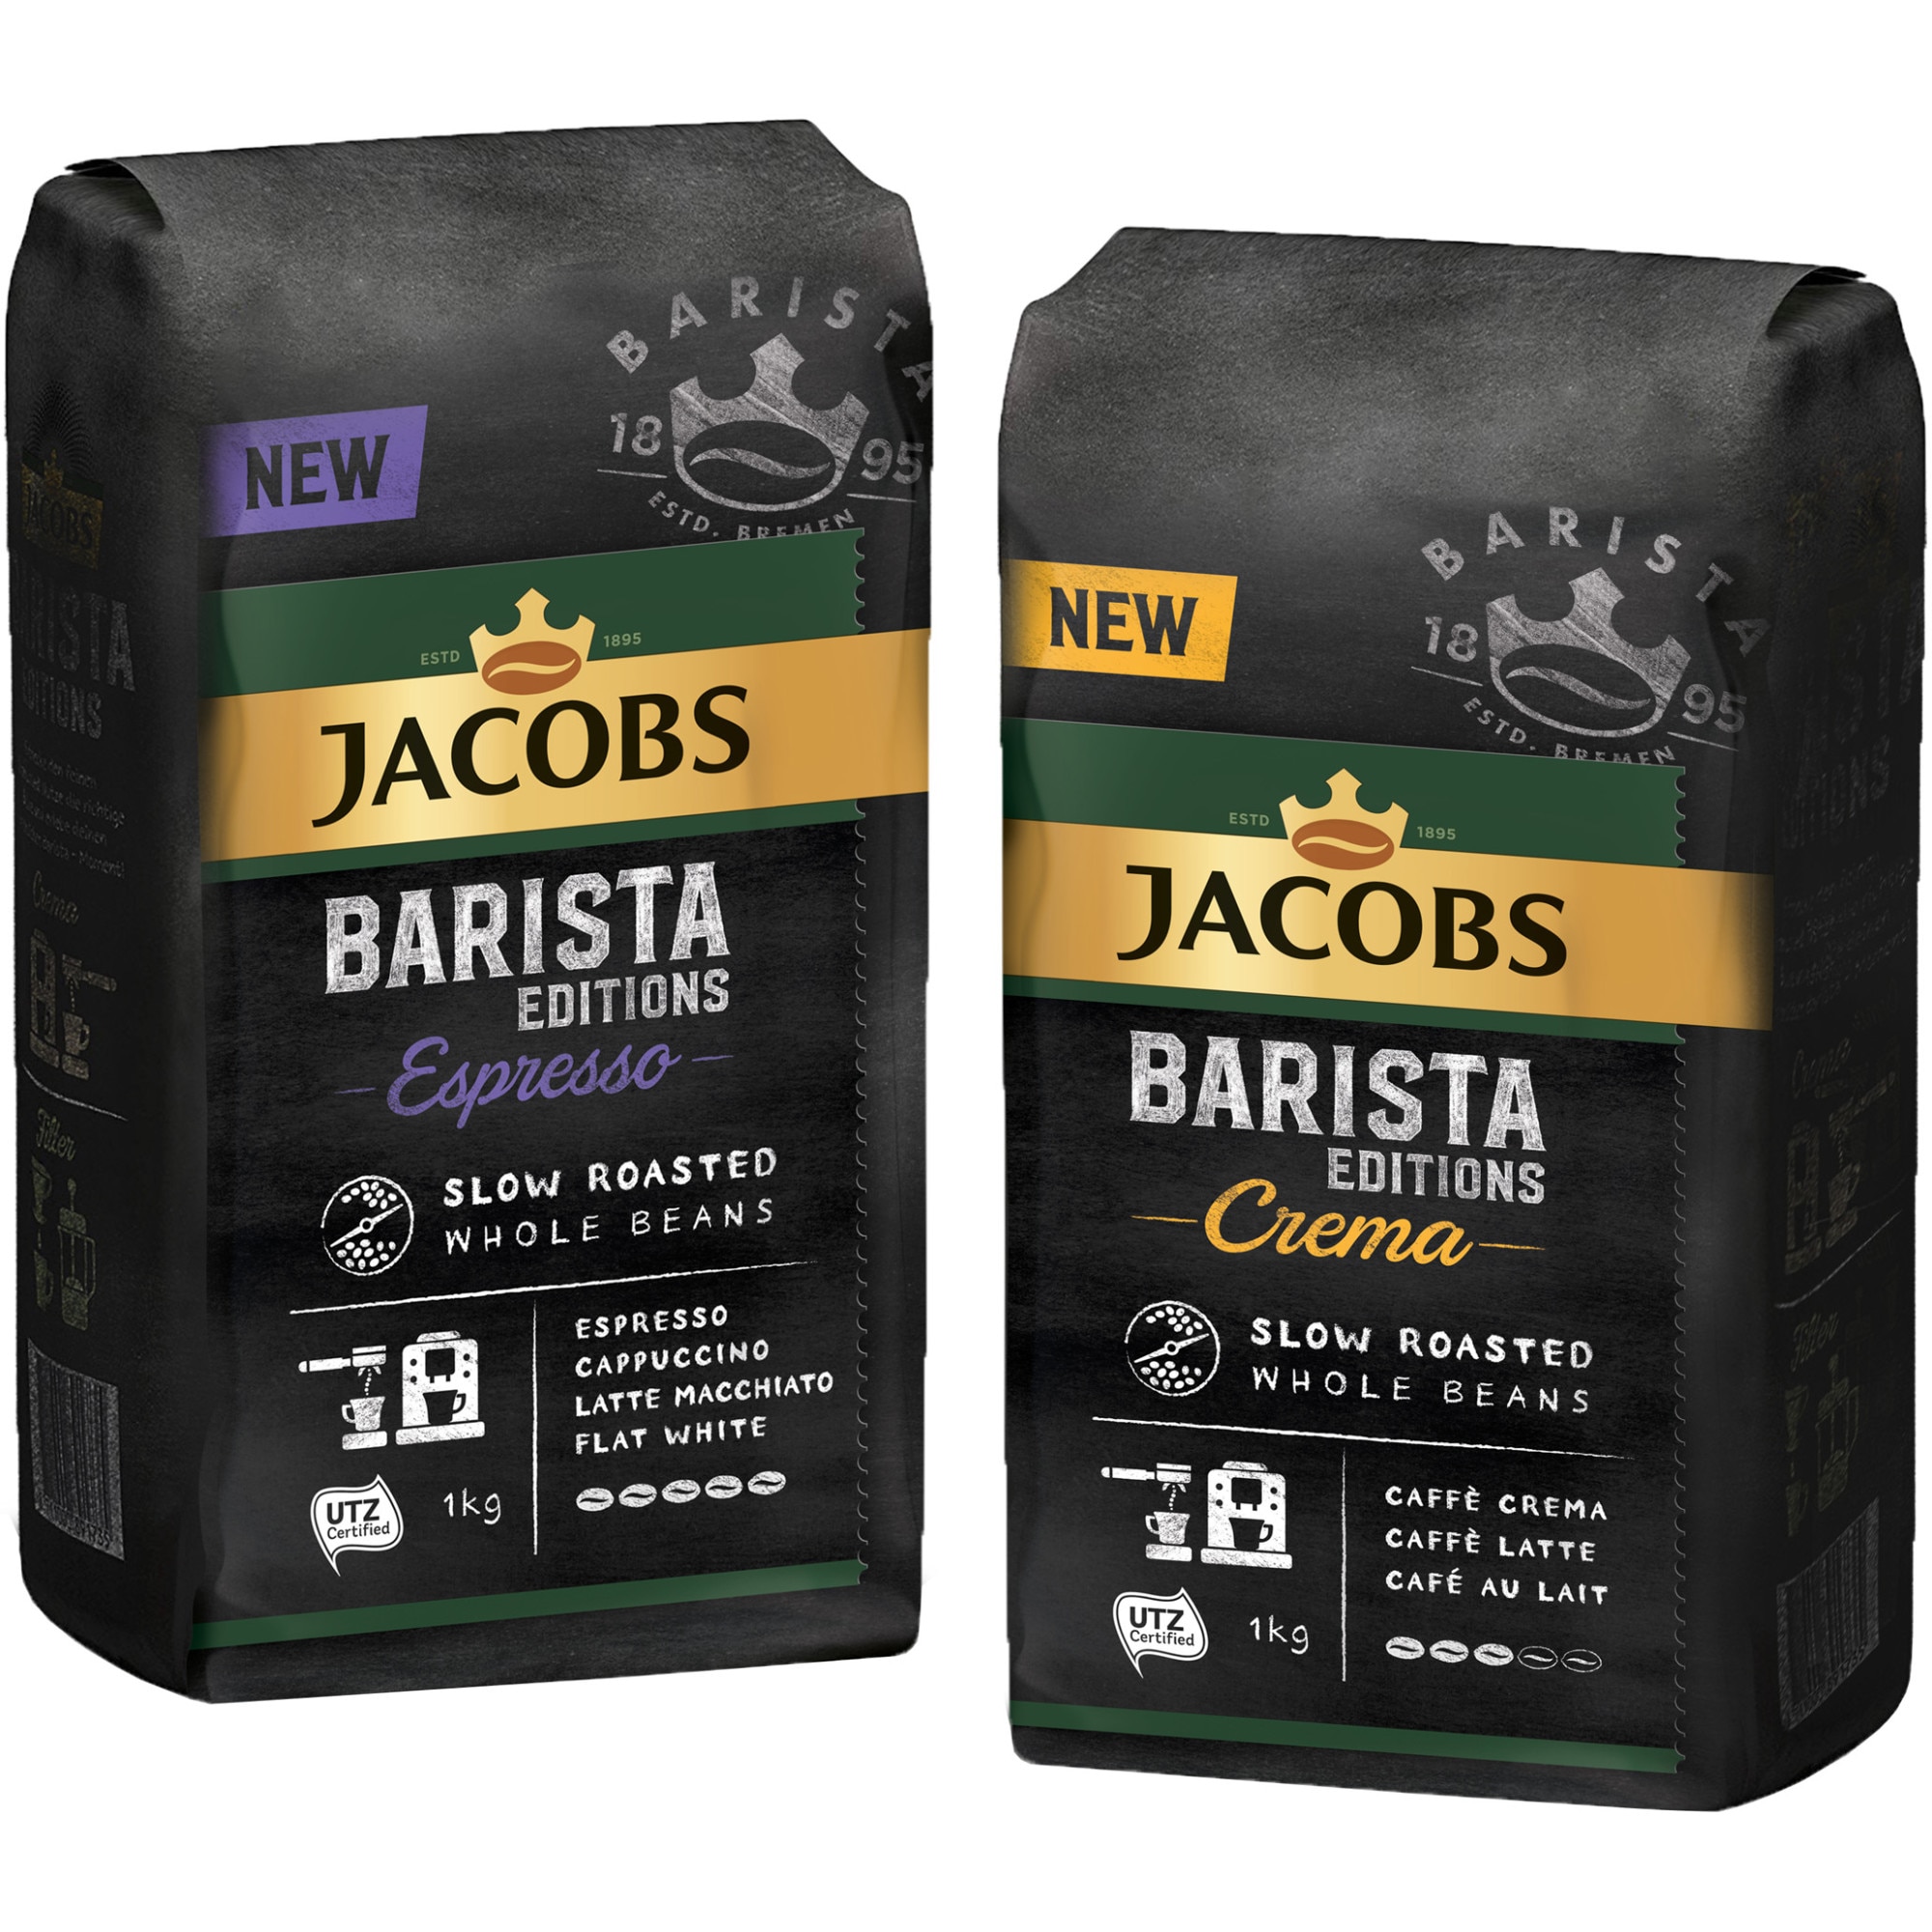 Set Cafea Cafea Crema Editions 1 Jacobs 1 si boabe Jacobs Kg boabe Barista Barista Kg Espresso